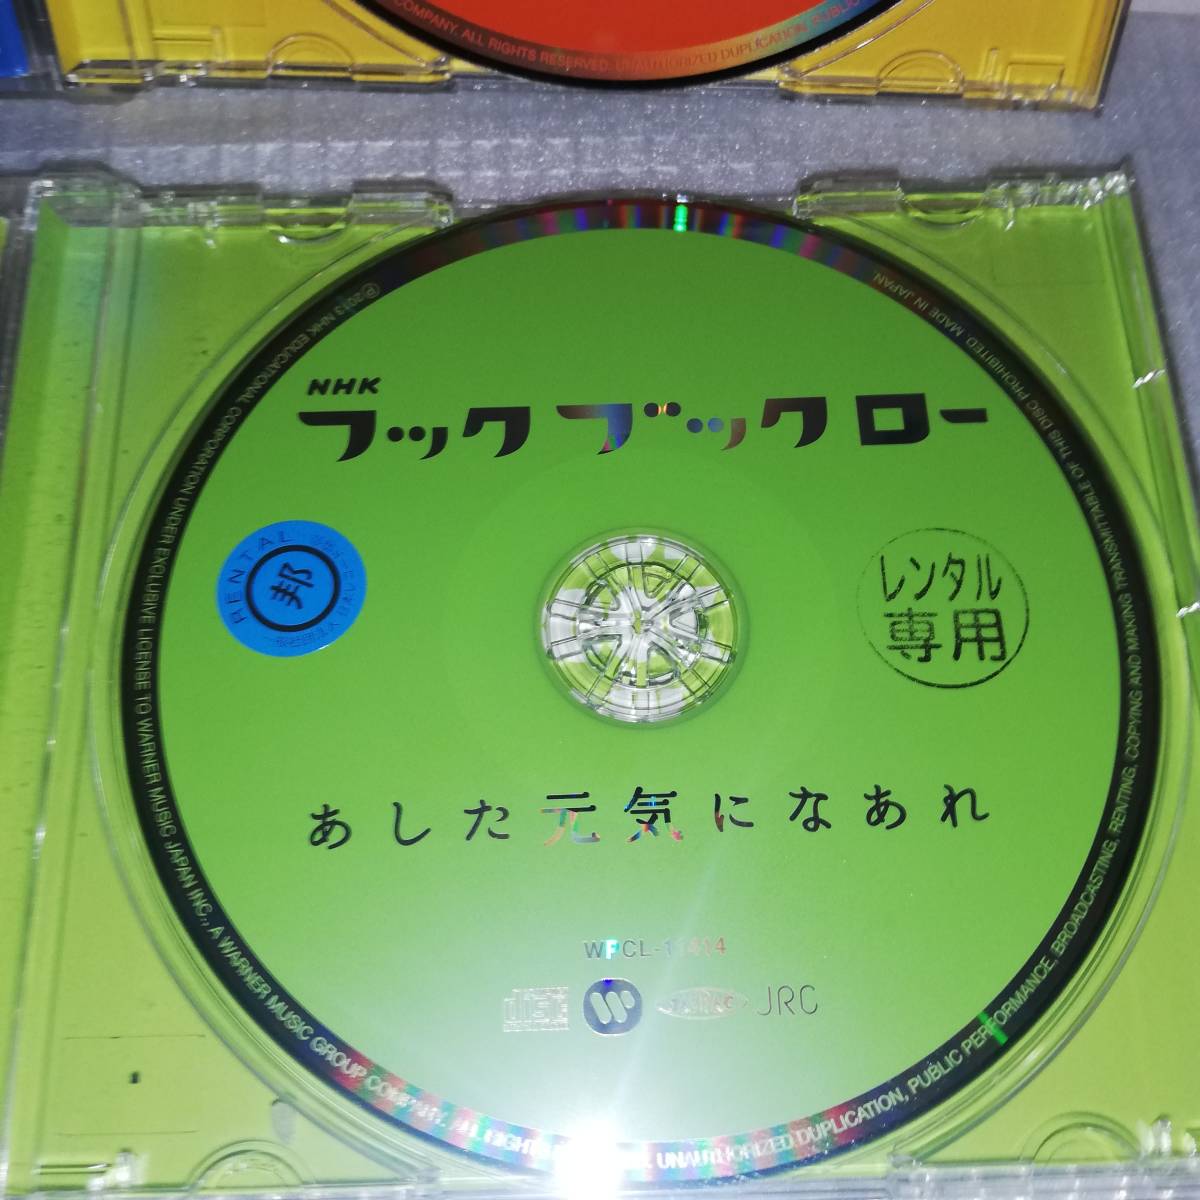 *NHK hook b crawler b. present /. did origin .....*CD disk total 2 sheets * rental * free shipping 